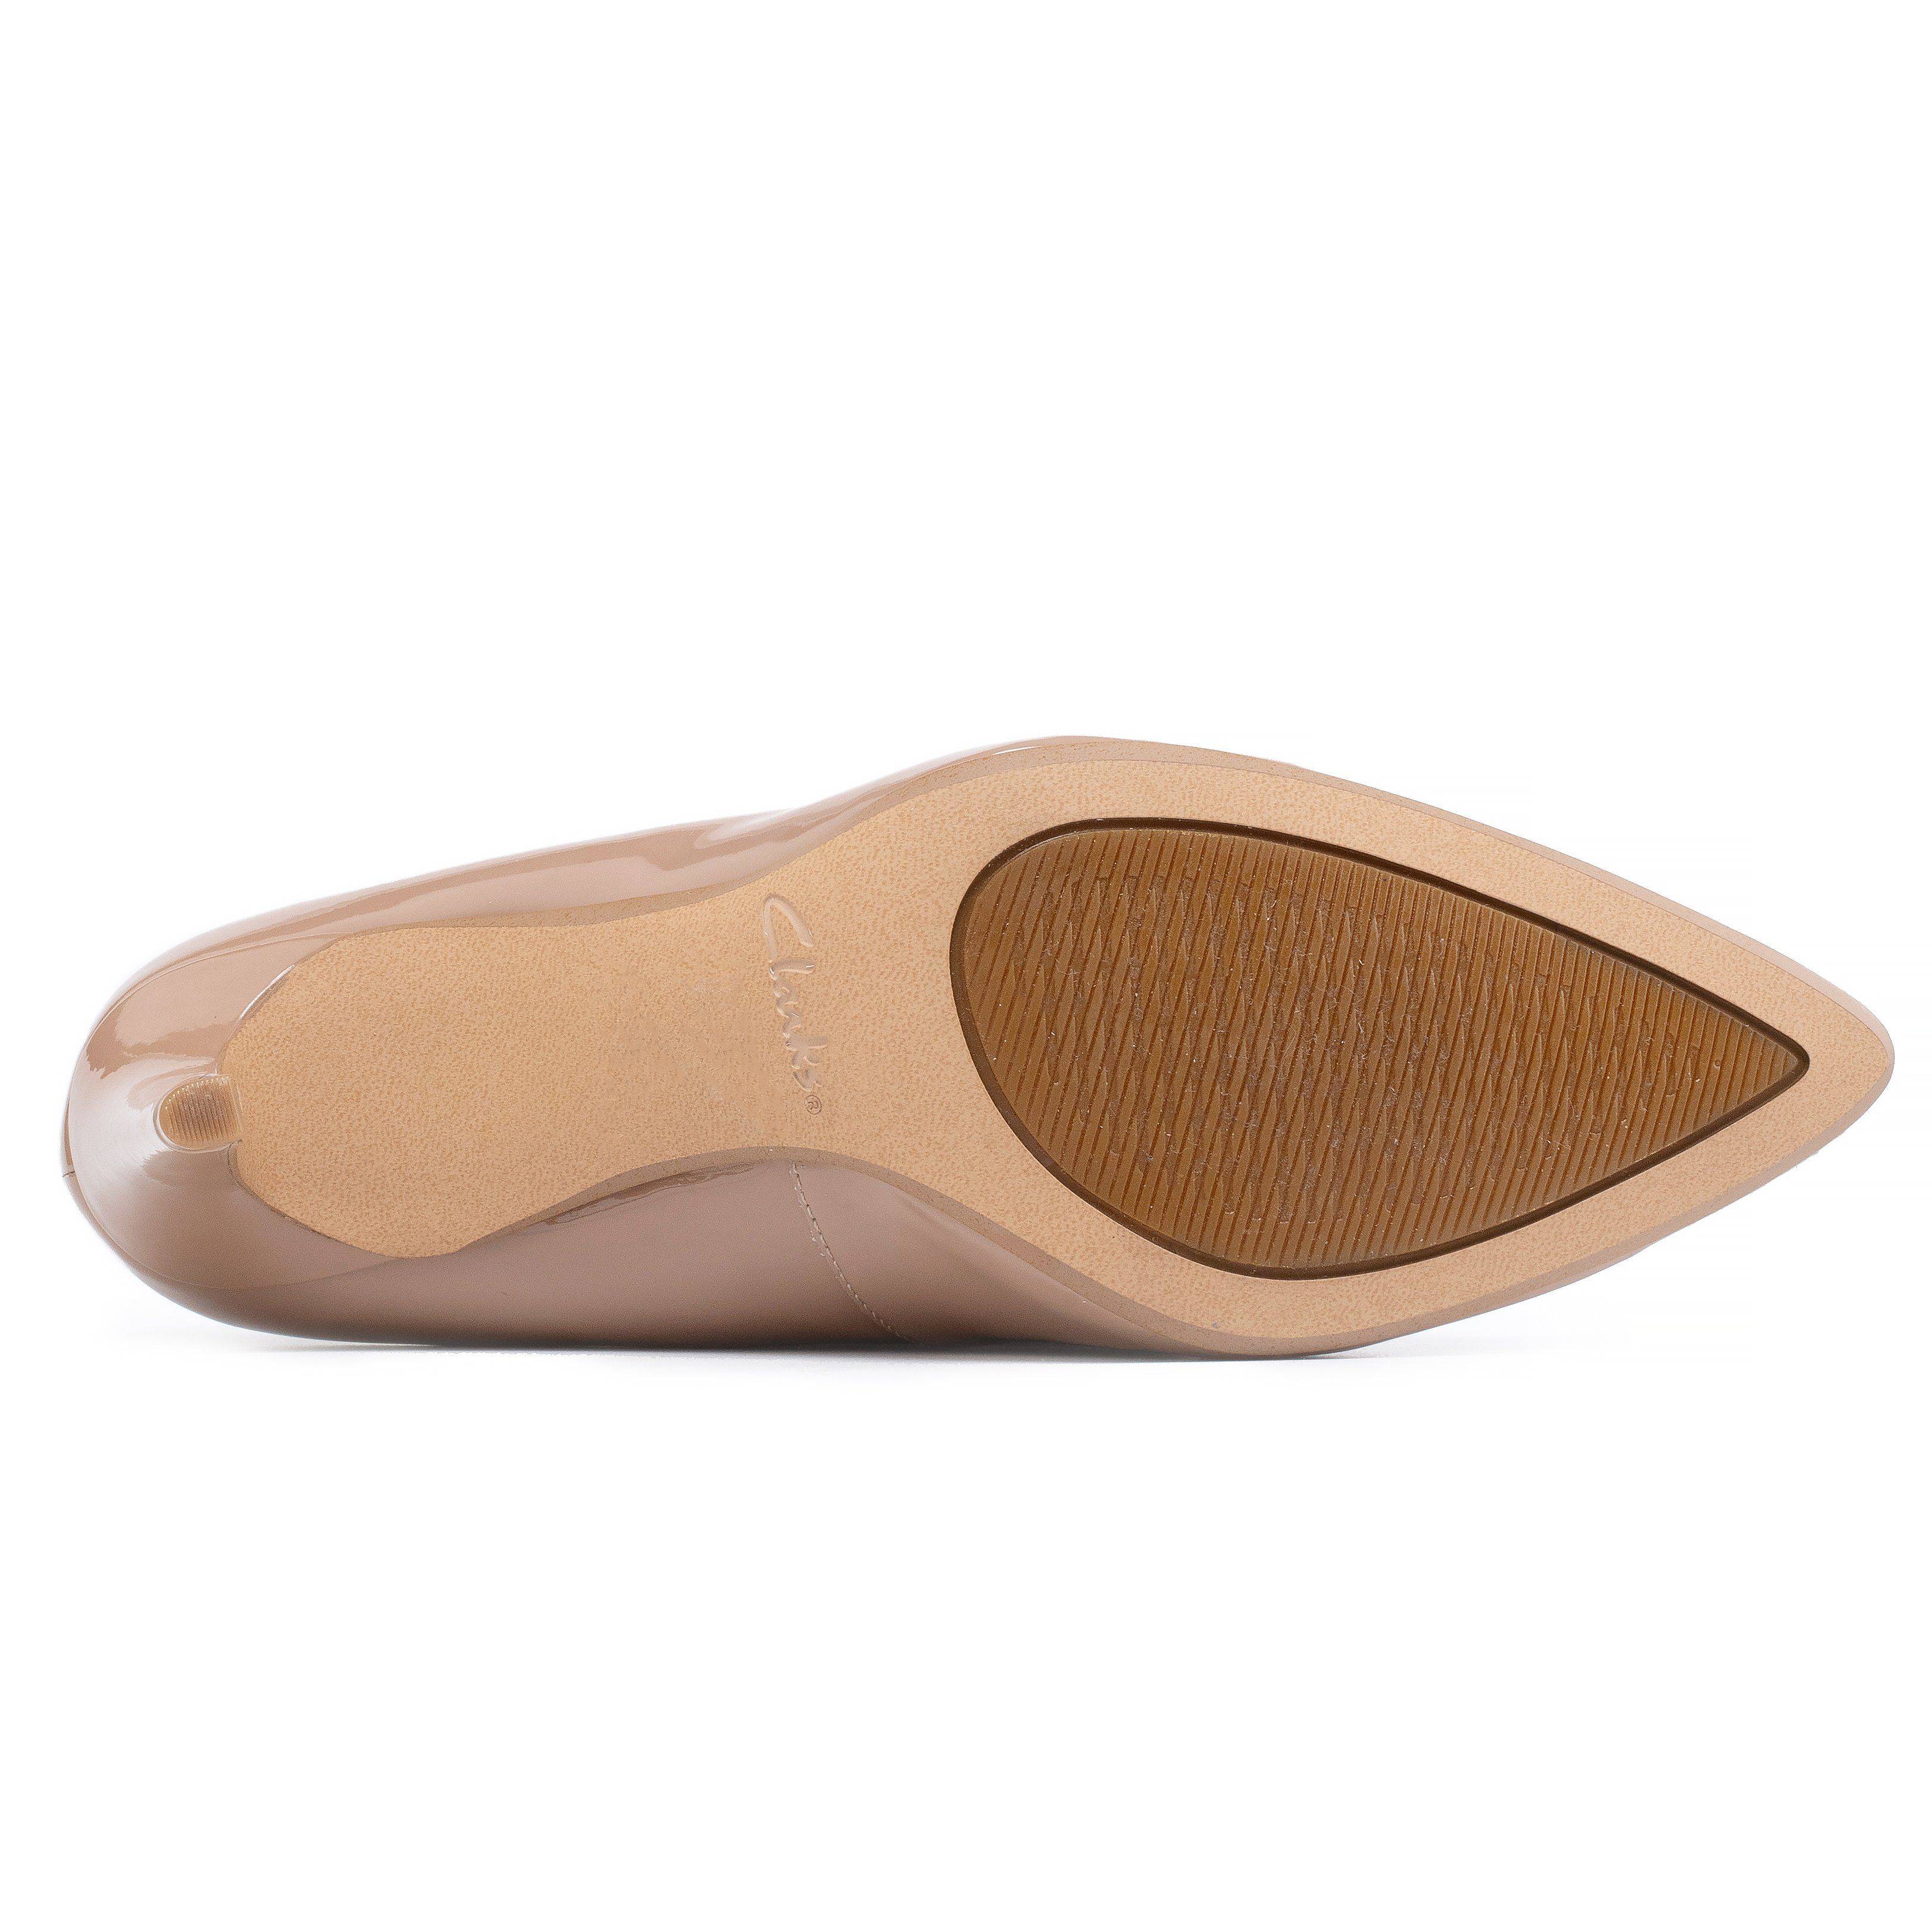 Женские туфли-лодочки Clarks(Laina Rae 26138883), бежевые, цвет бежевый, размер 41 - фото 7